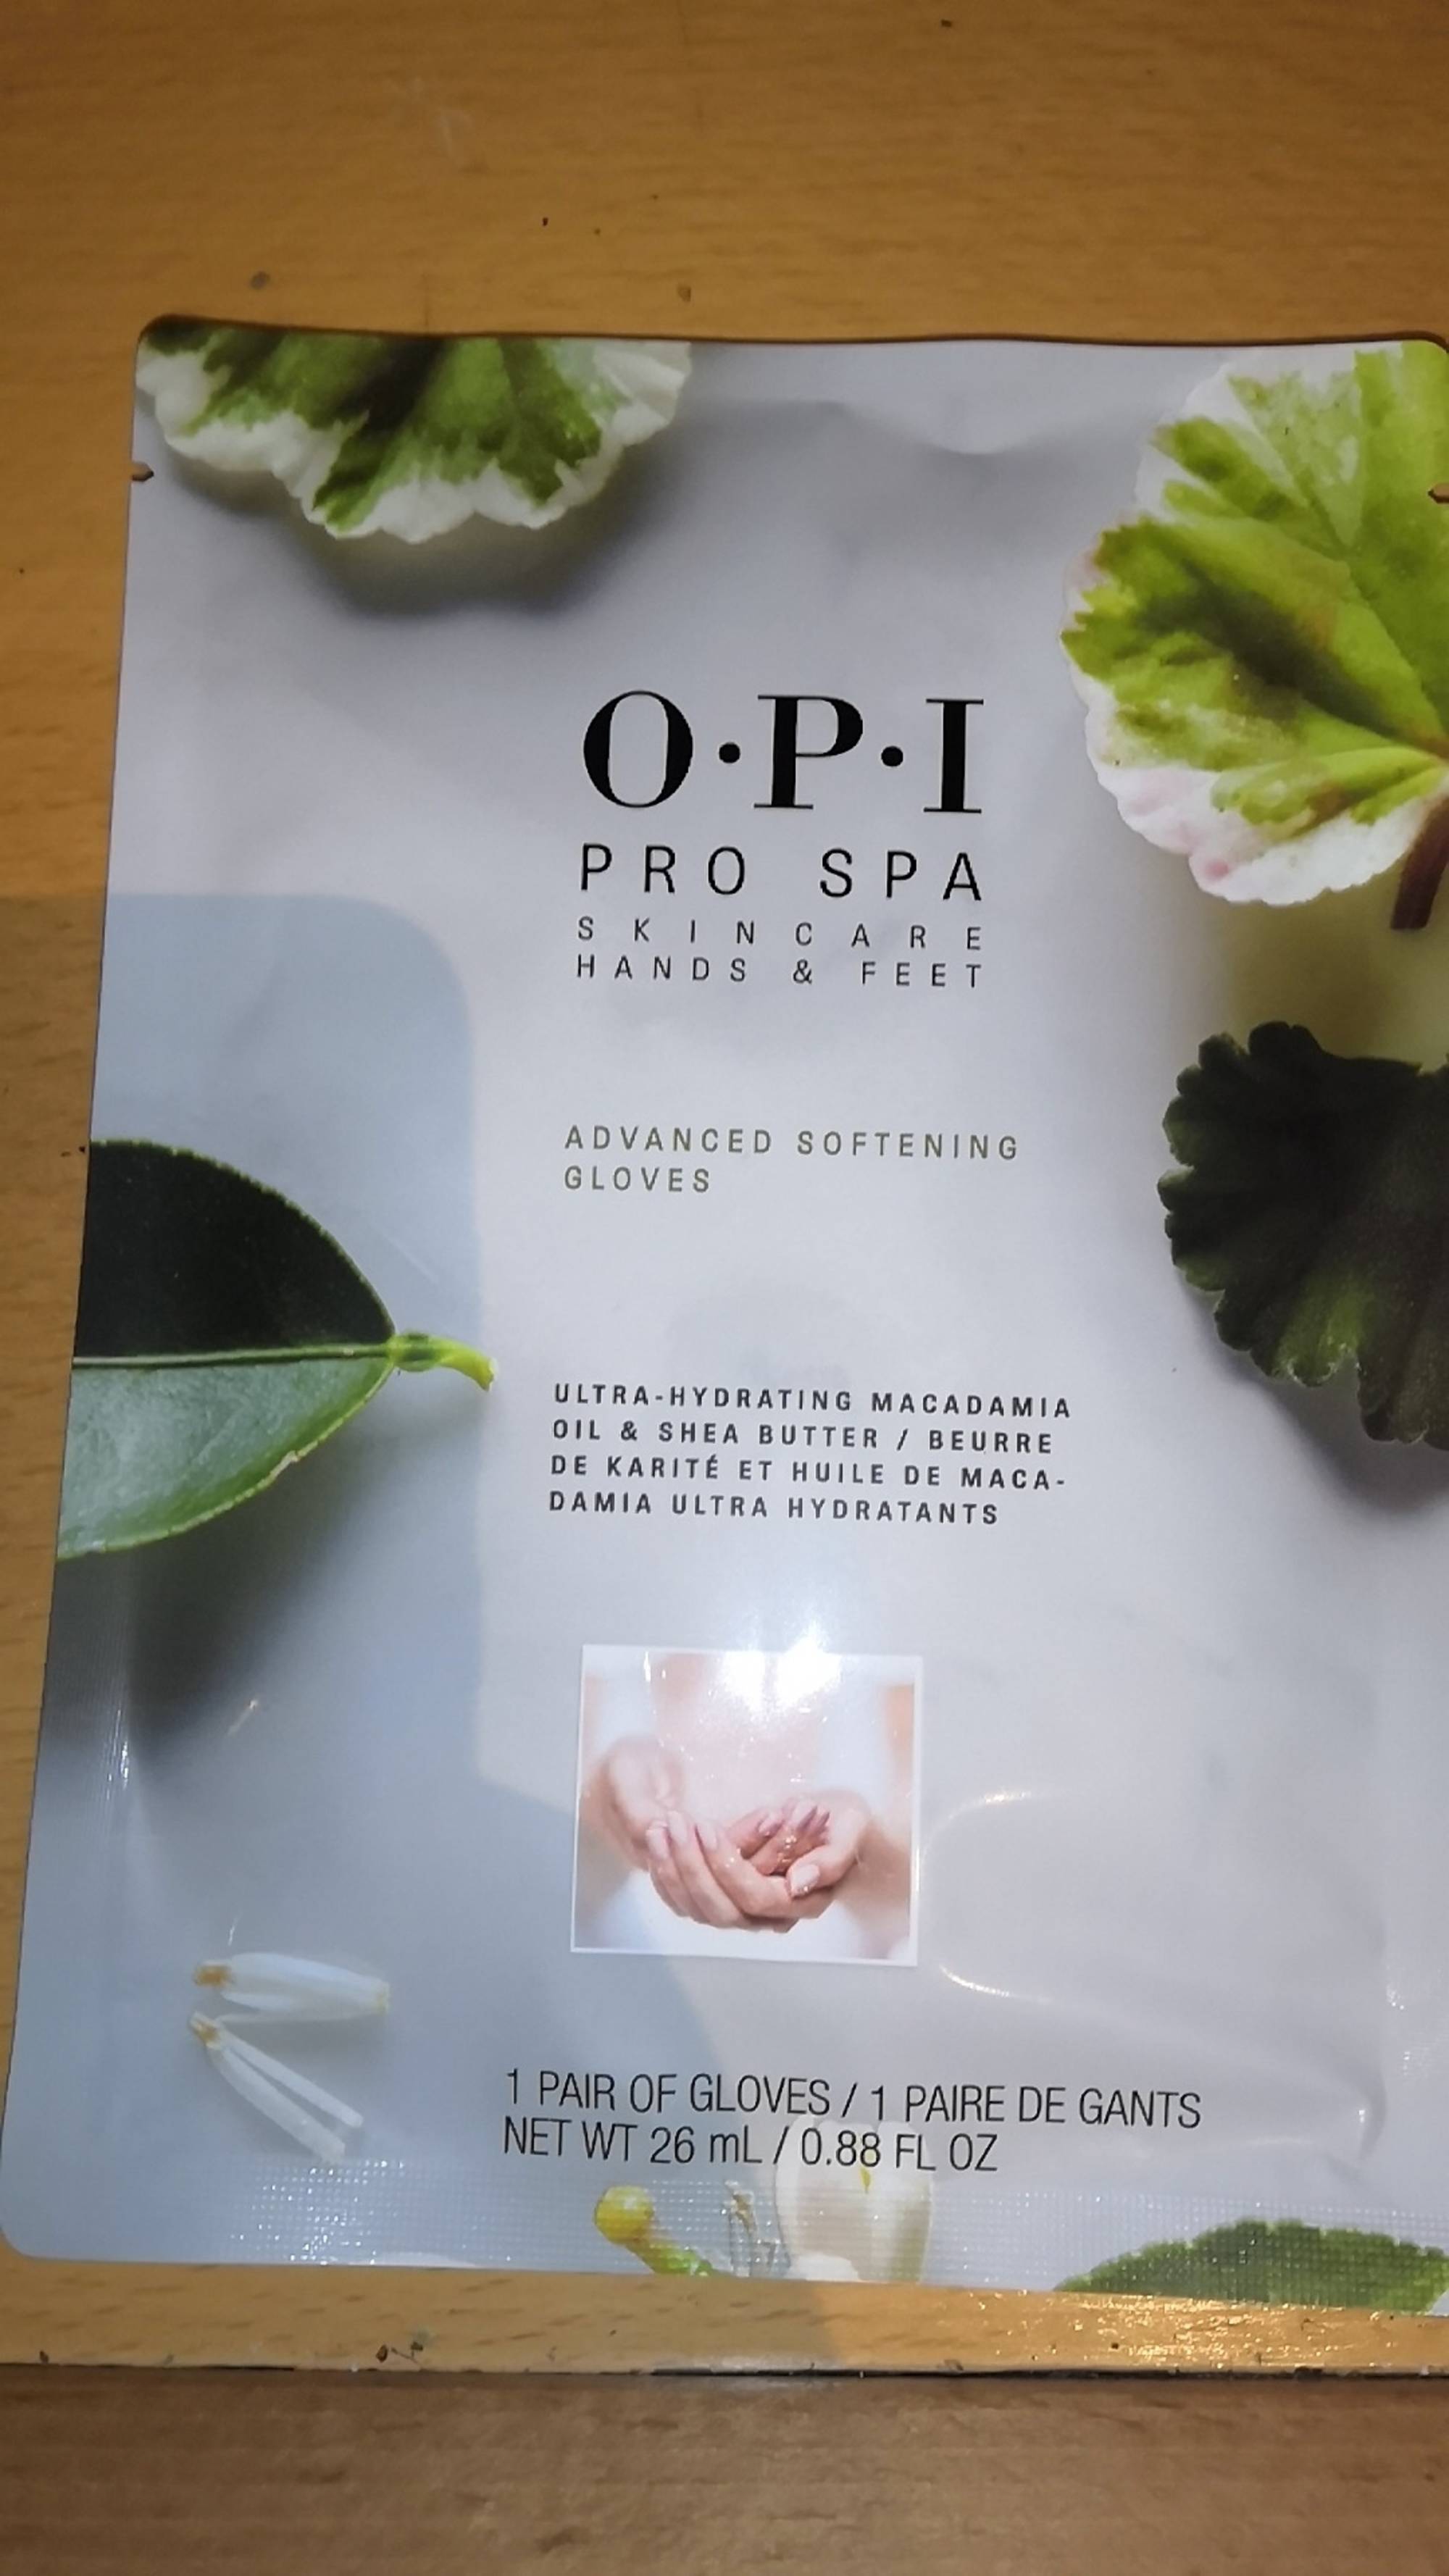 O.P.I - Pro spa - Skincare hands & feet